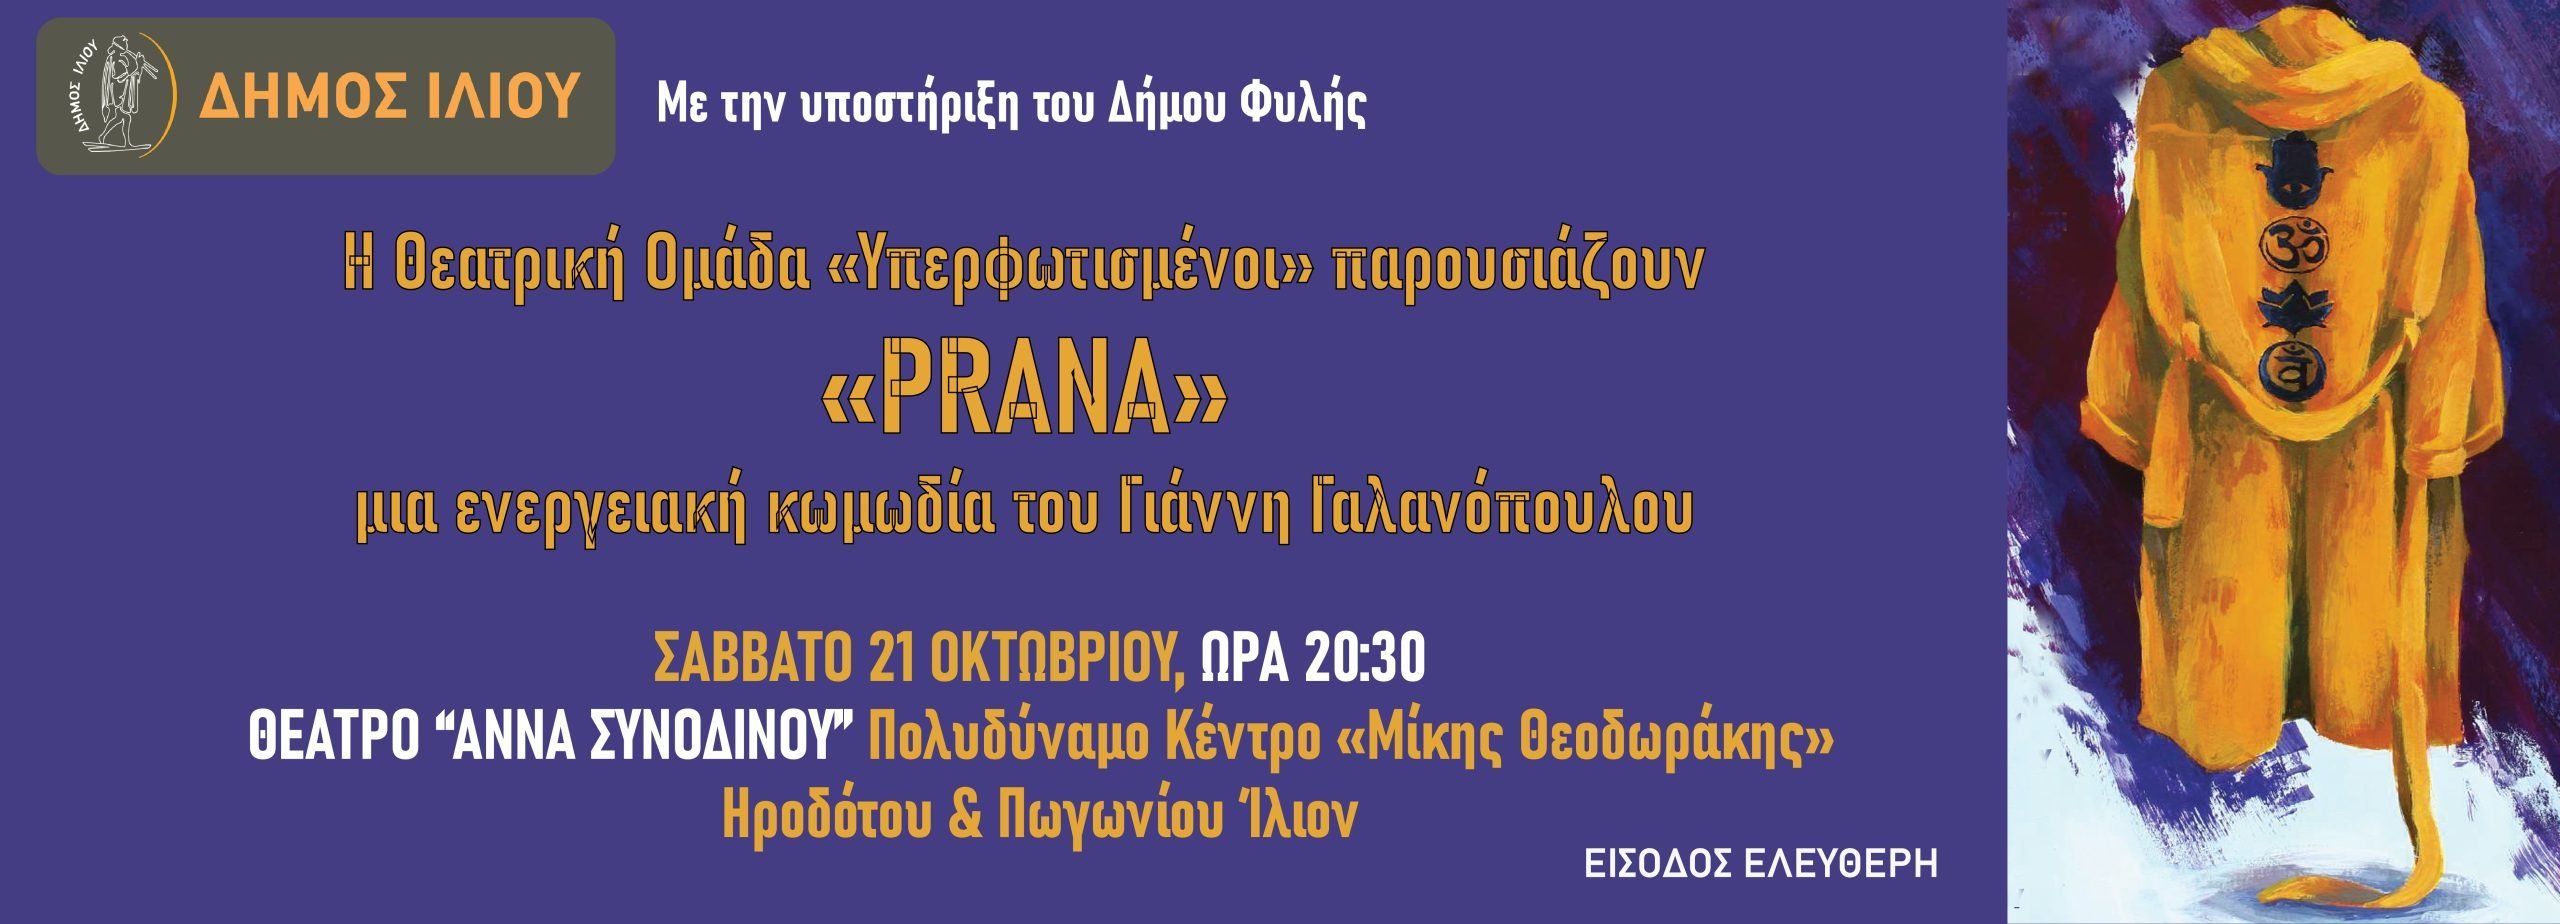 Banner για την ενεργειακή κωμωδία "PRANA"